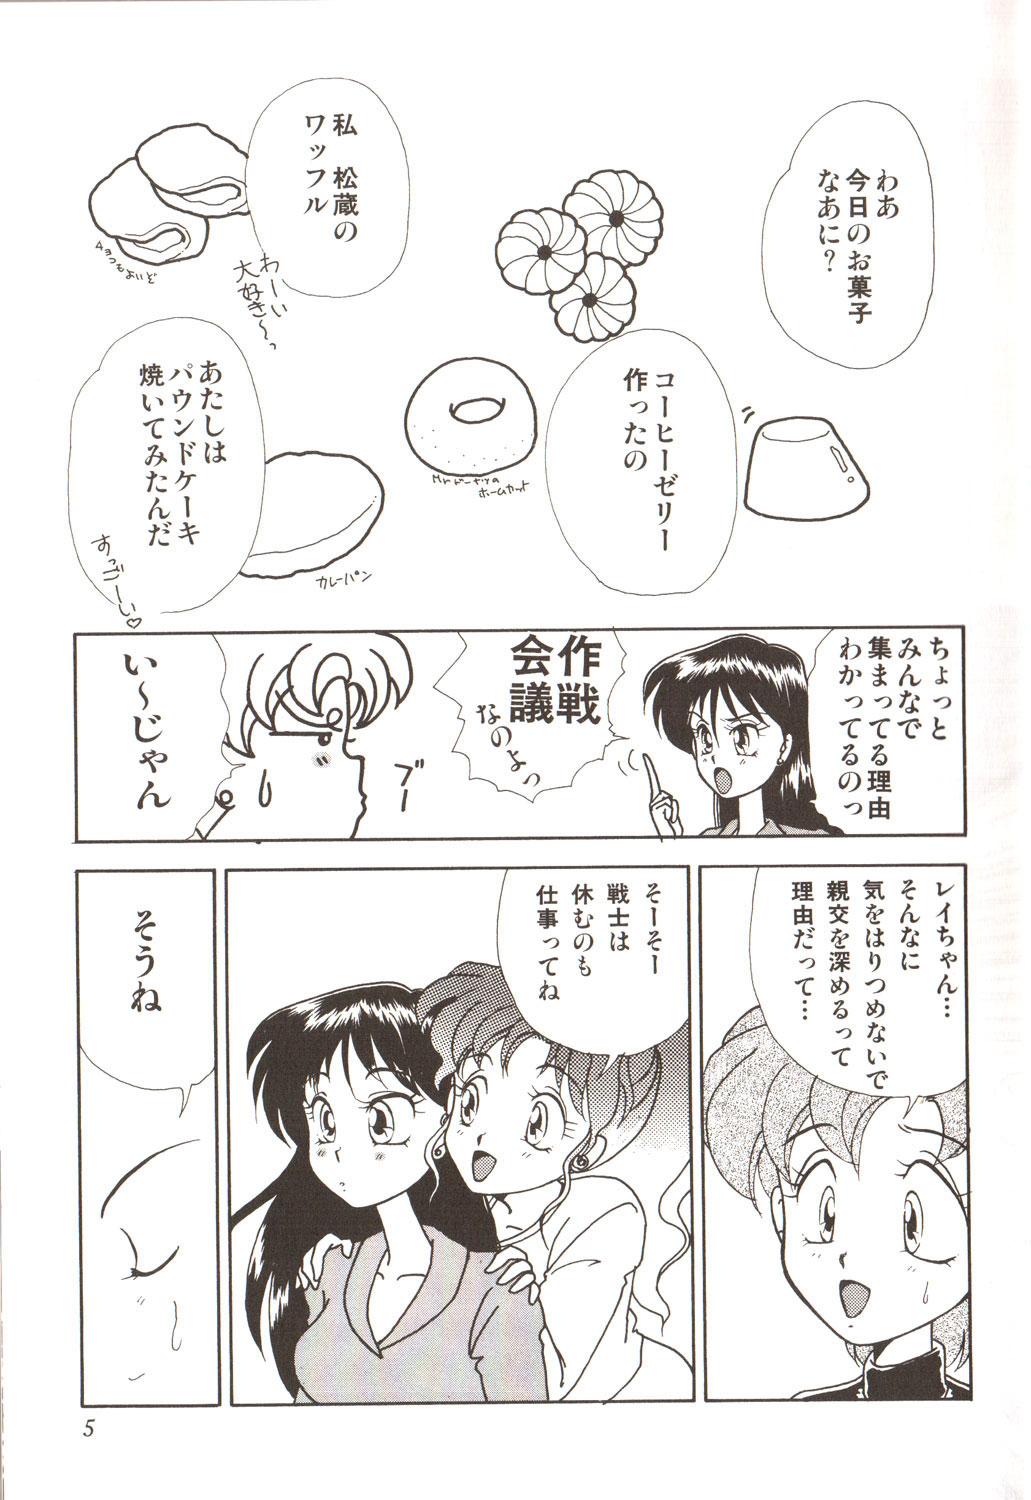 Mulher Lunatic Party 3 - Sailor moon Super - Page 9